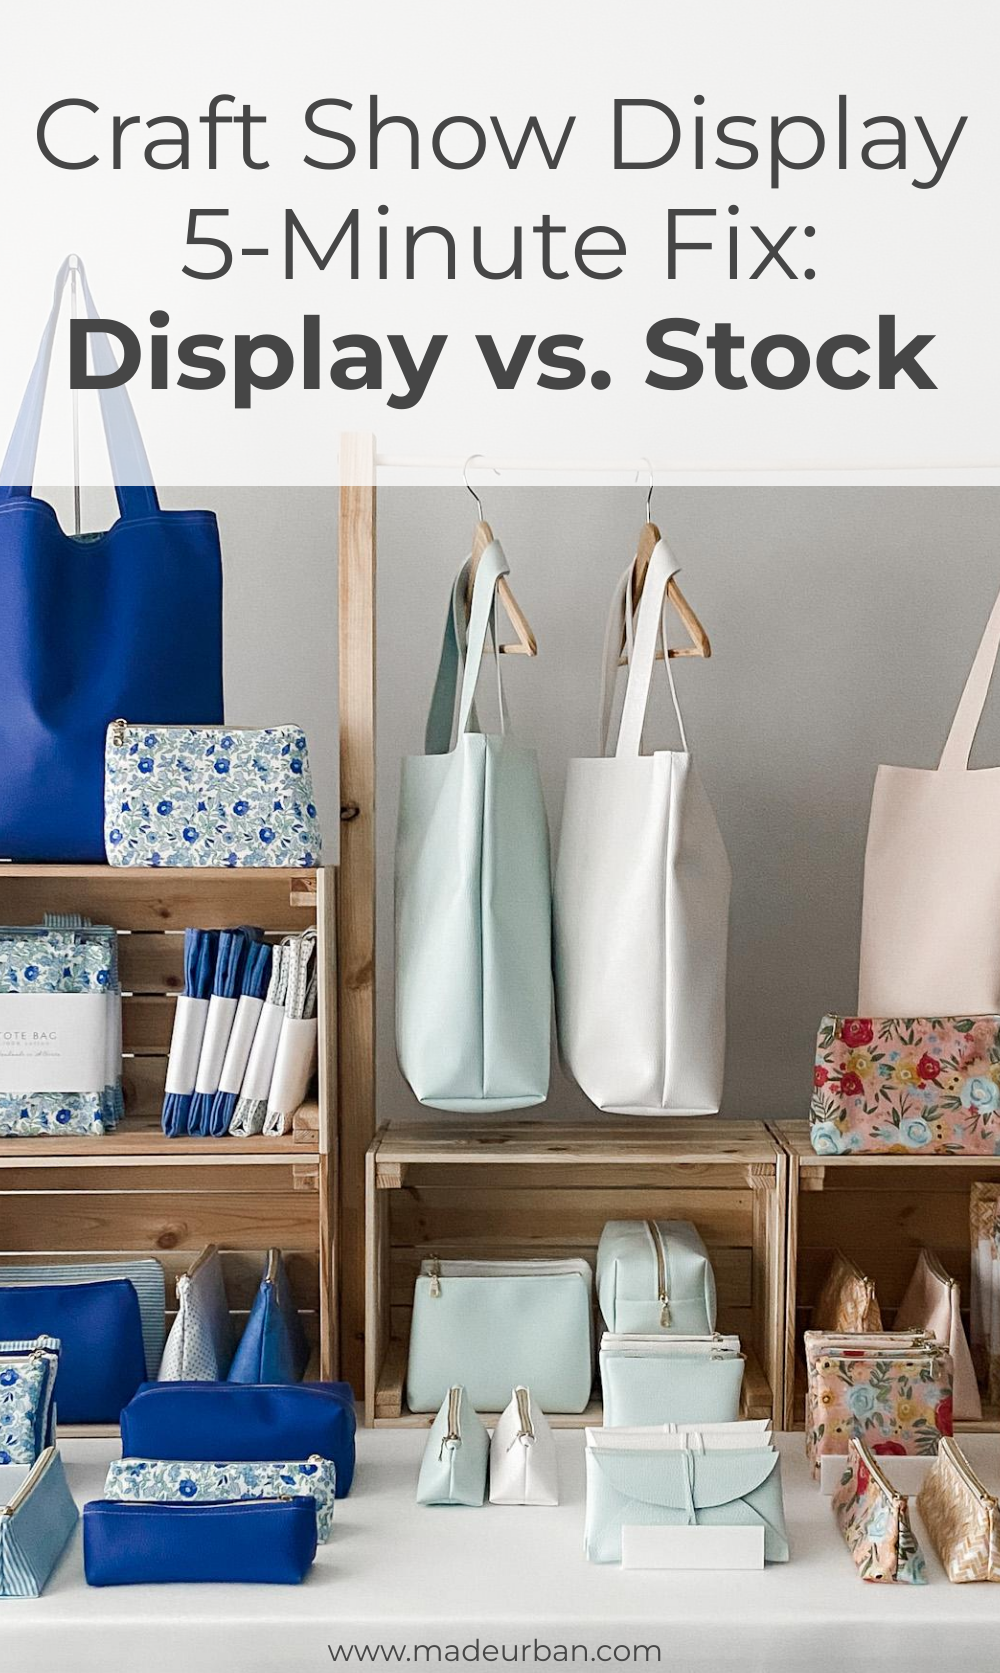 Craft show display vs. stock